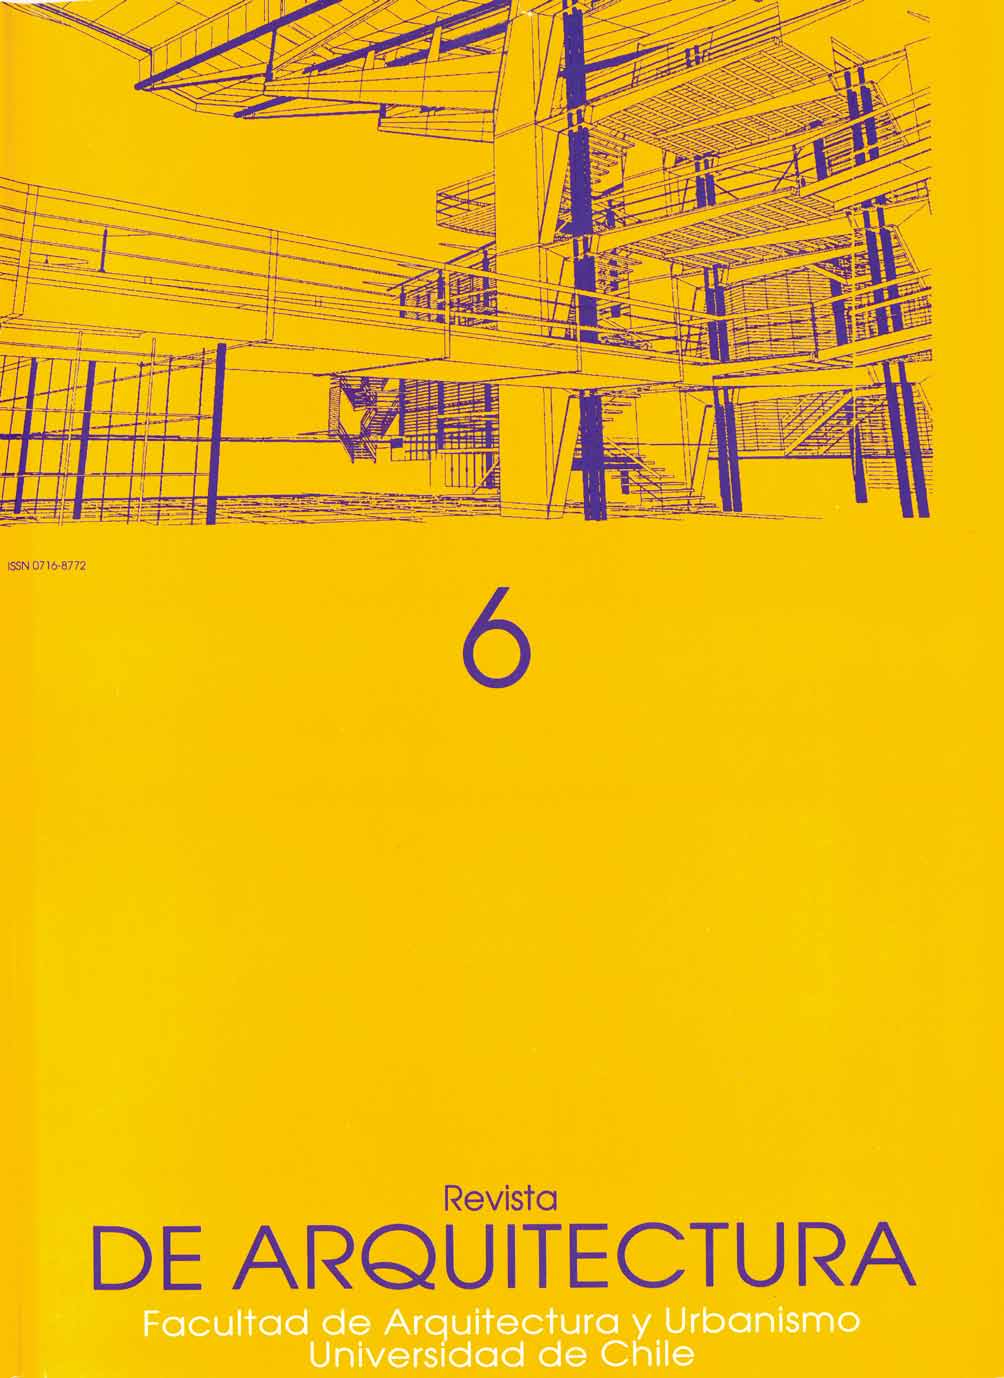 							View Vol. 6 No. 6 (1995): De Arquitectura
						